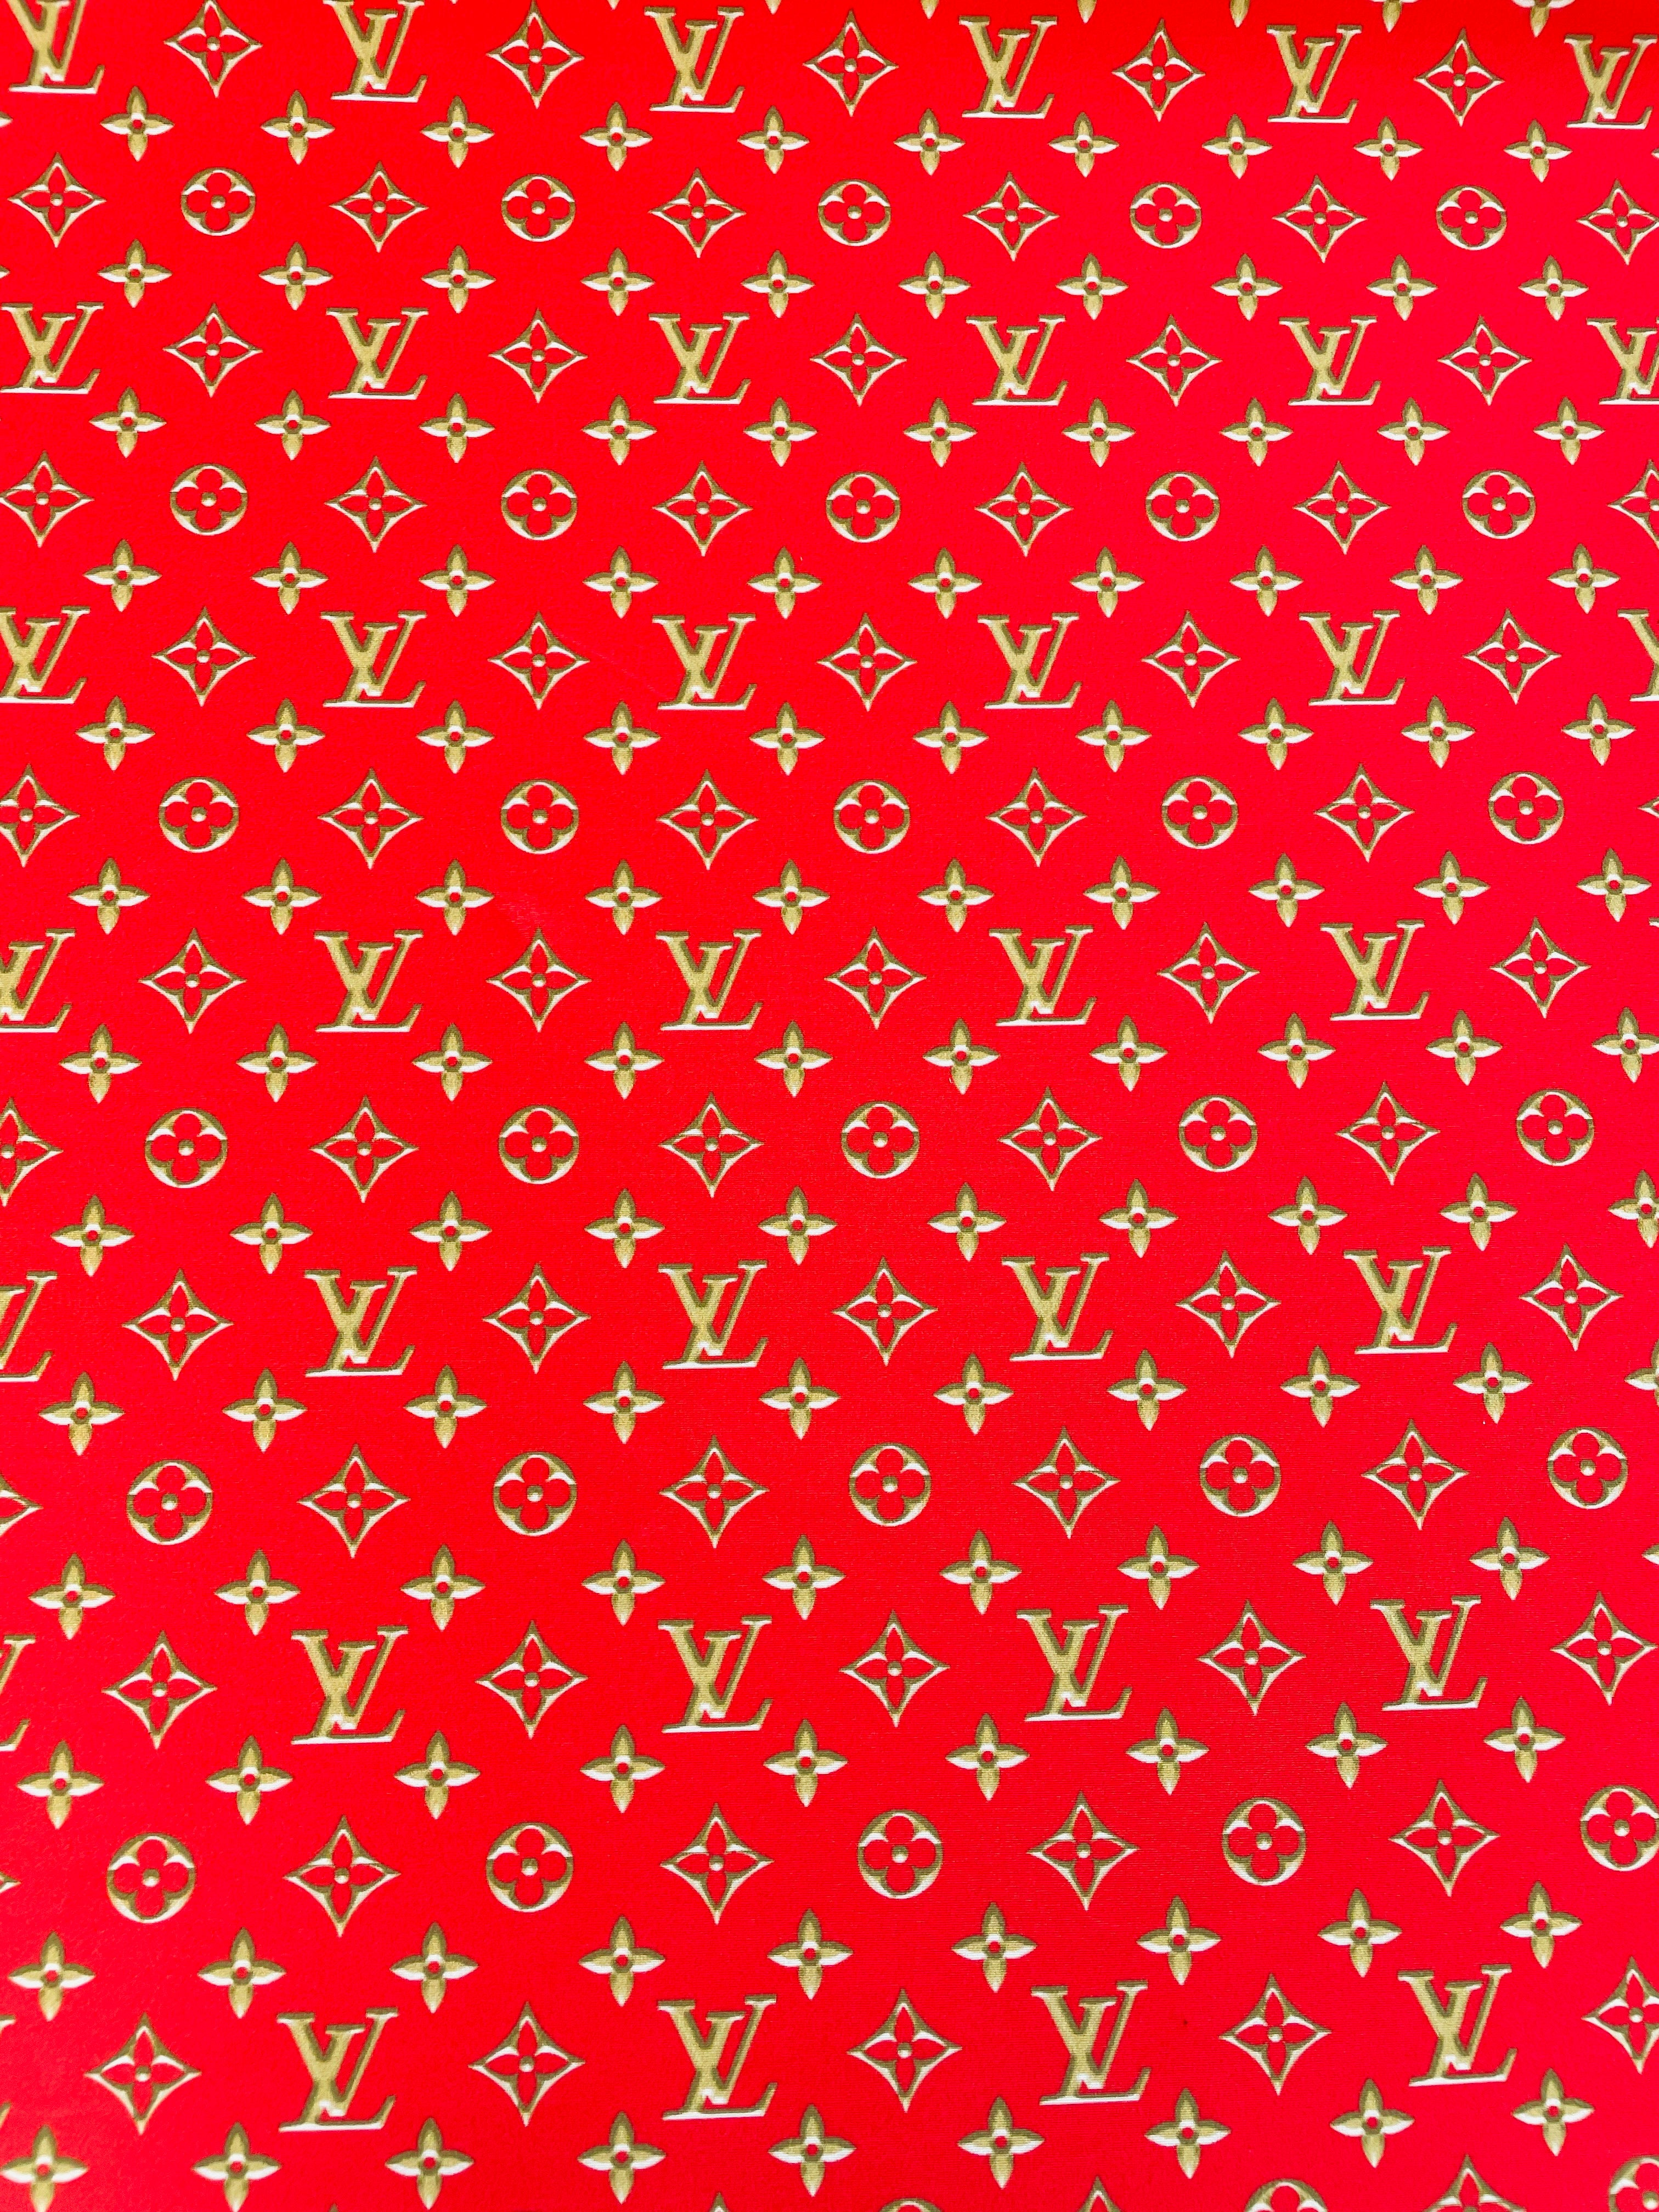 Red Louis Vuitton Logo - LogoDix